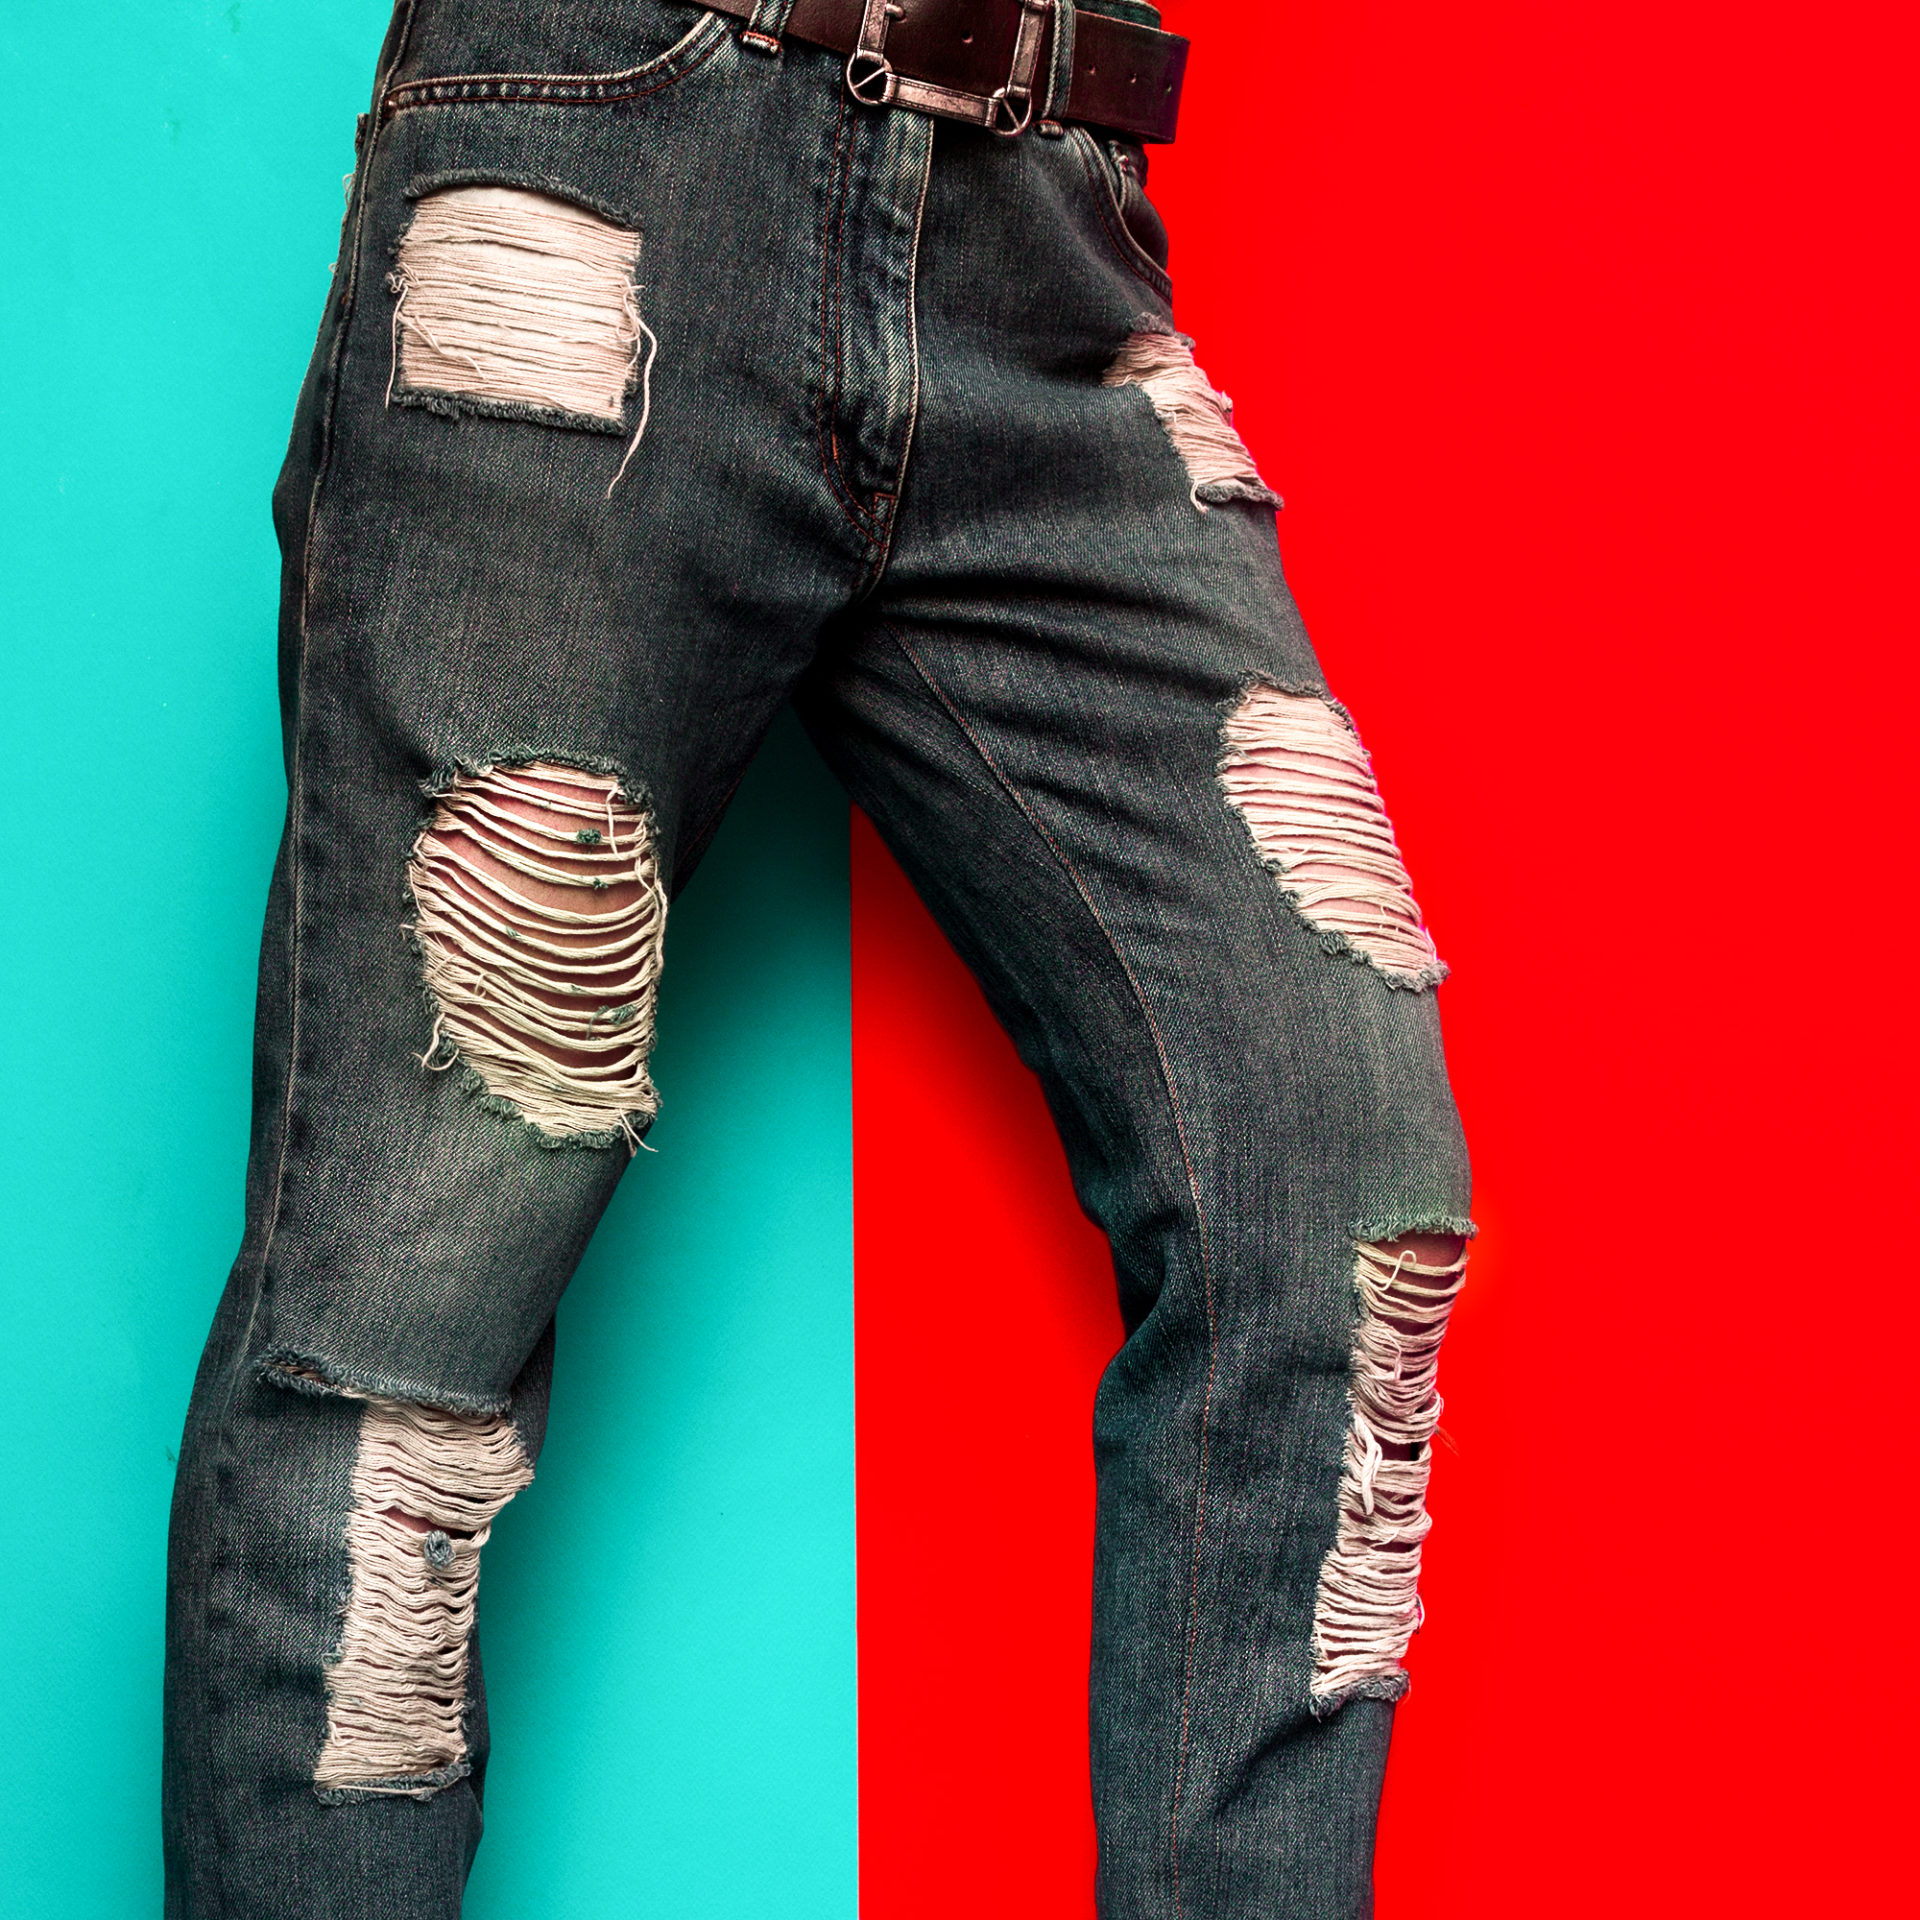 Jeans Torn Spots